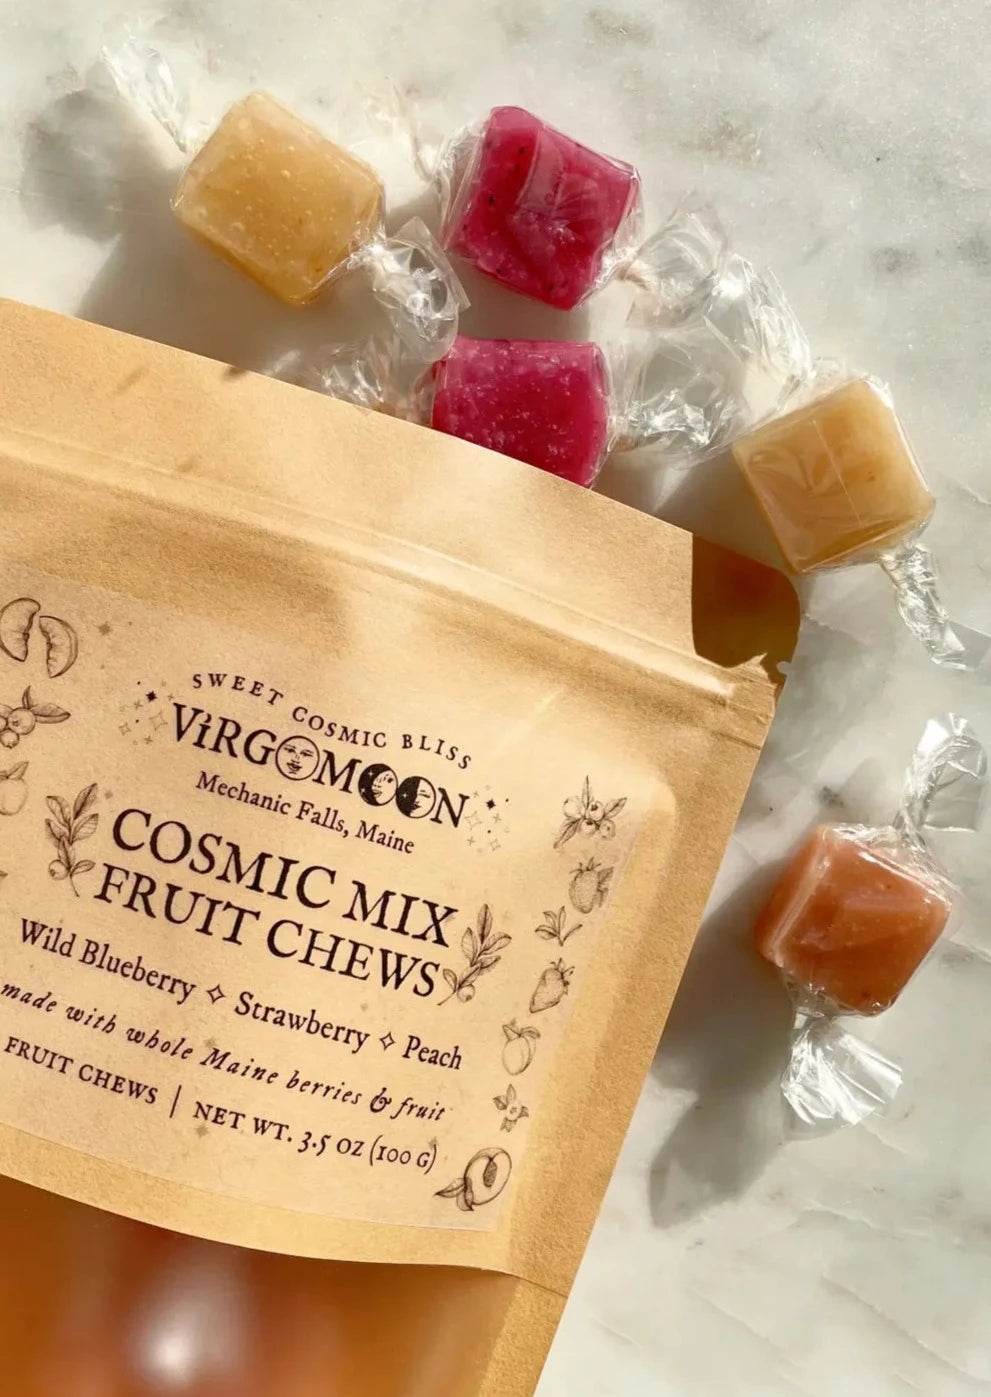 Cosmic Mix Fruit Chews //  Maine Strawberry, Blueberry, Peach